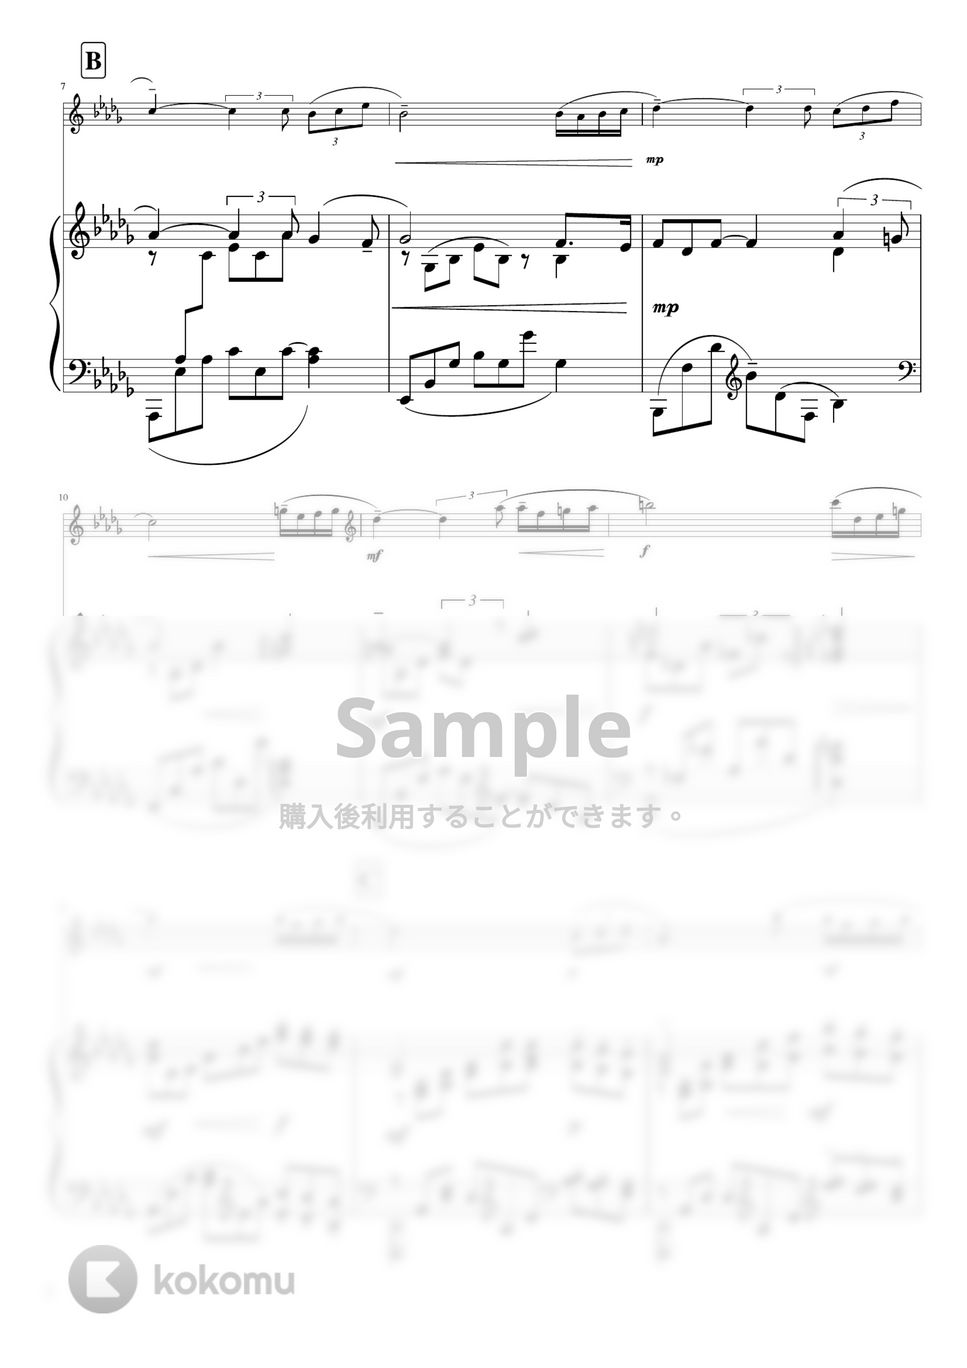 S.ラフマニノフ - パガニーニの主題による狂詩曲より第18変奏 (D♭・ヴァイオリン&ピアノ) by pfkaori